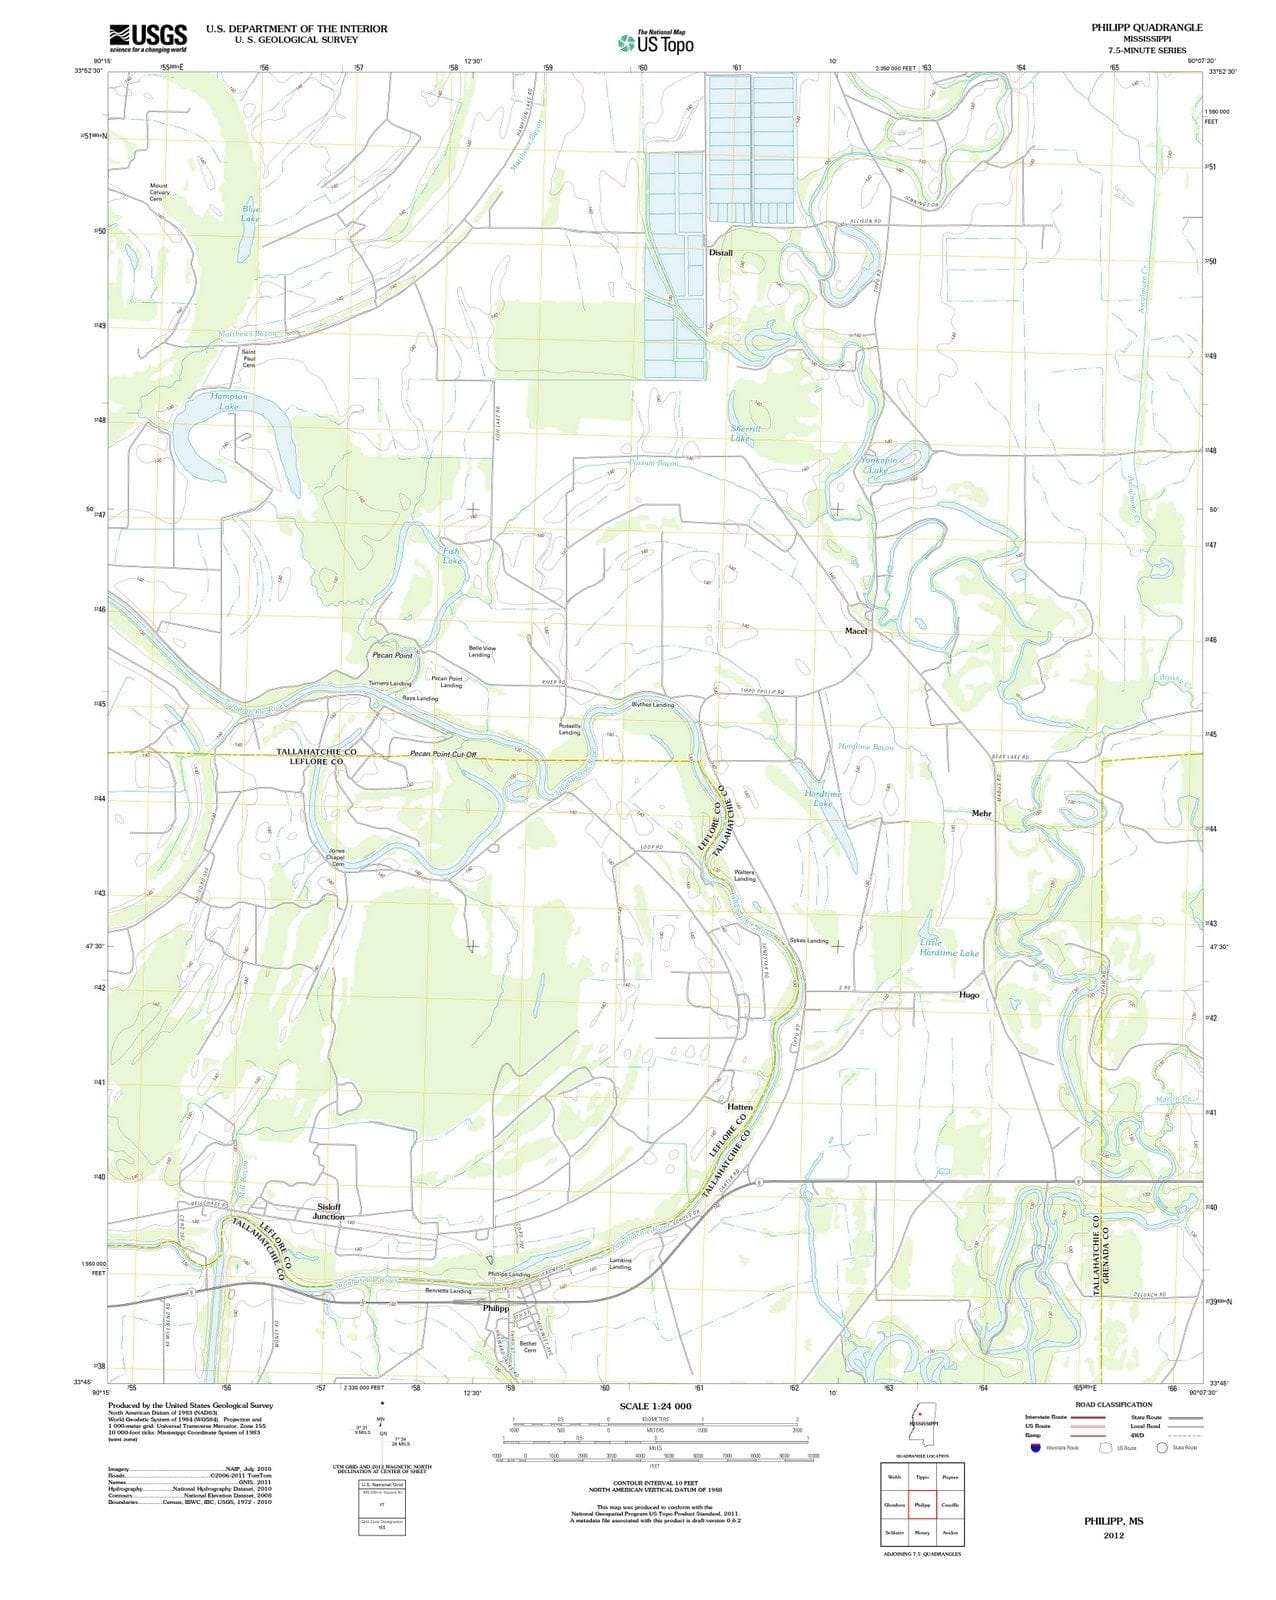 2012 Philipp, MS - Mississippi - USGS Topographic Map